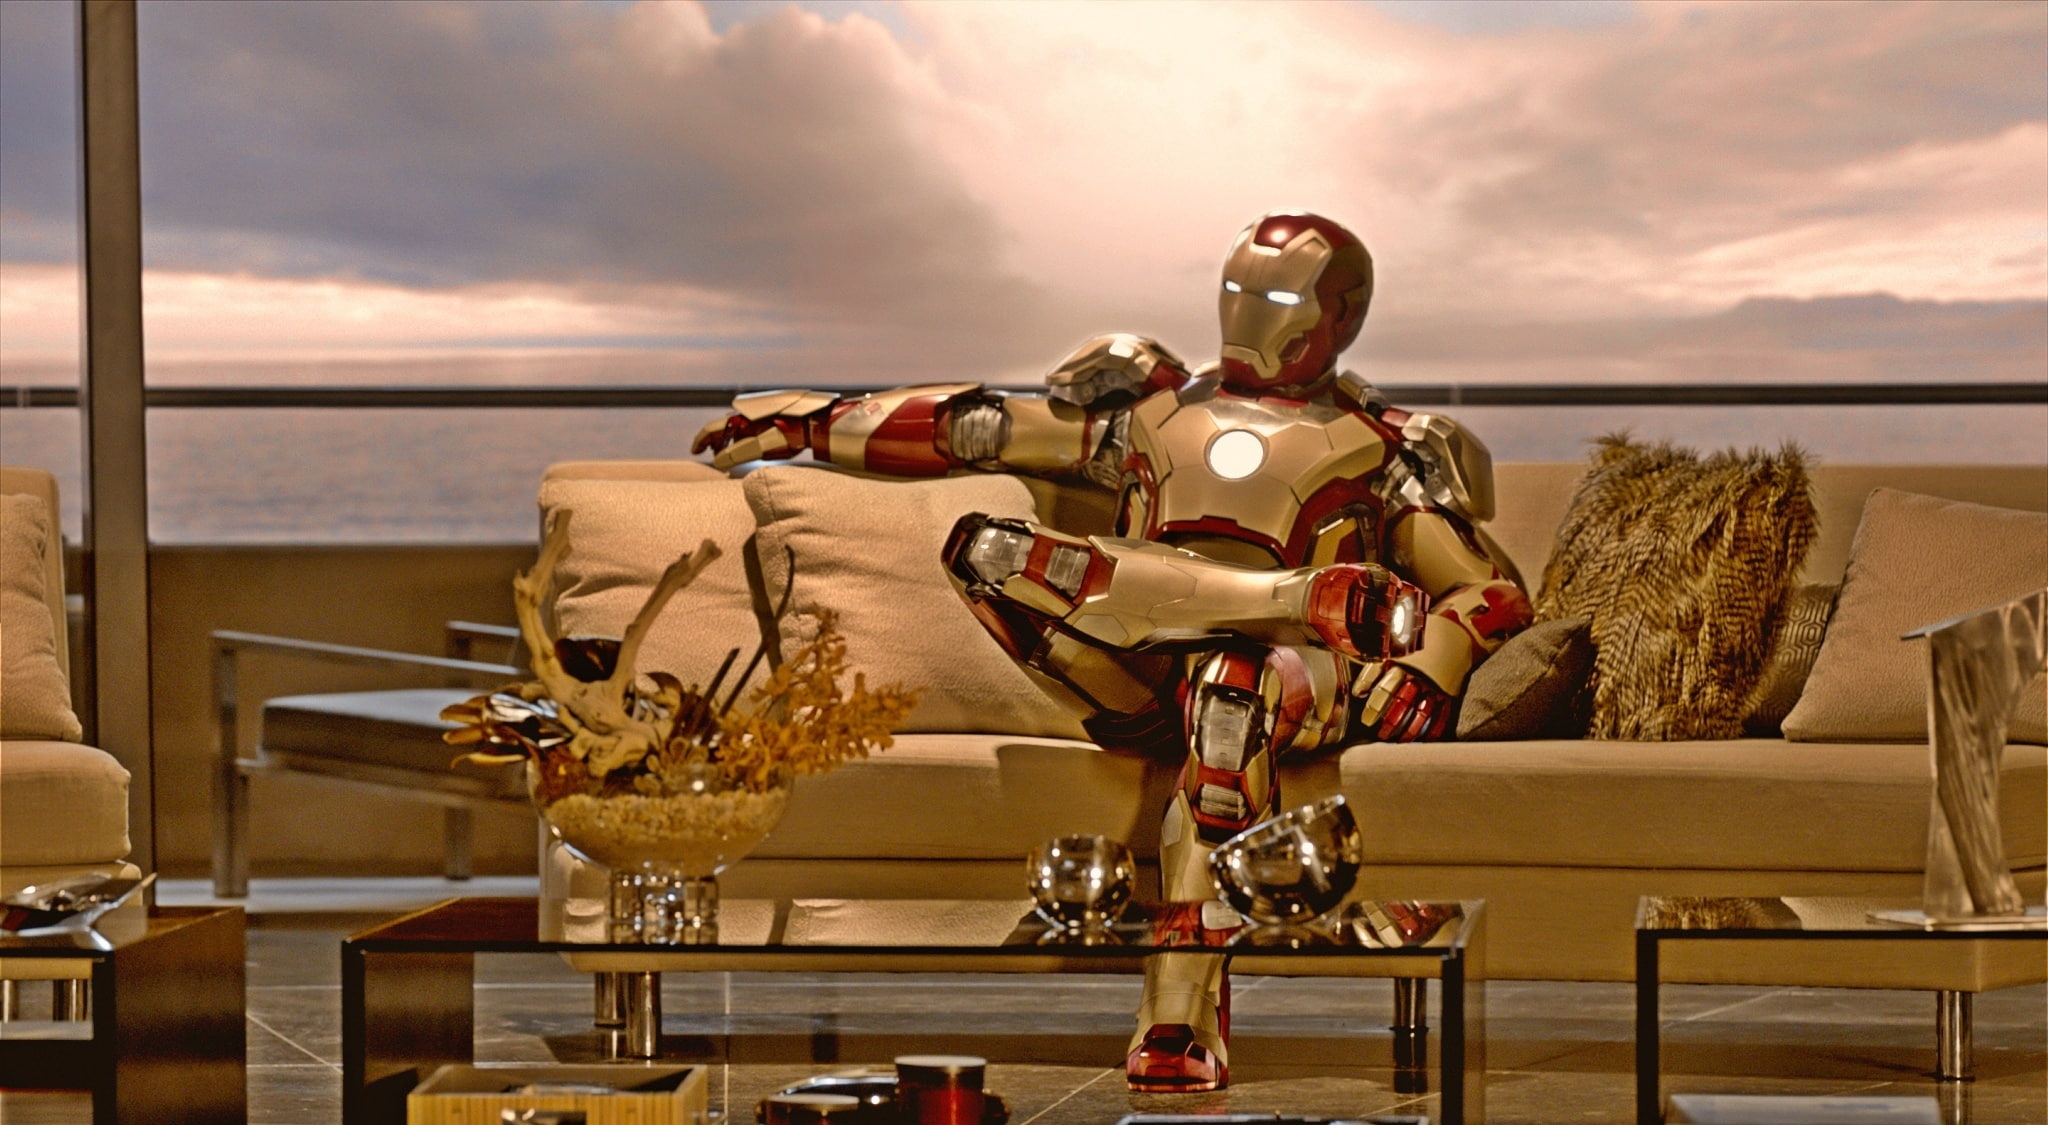 Iron Man 3, Iron Man suit, Movies, Couch, 2013, sky, sea, cloud - sky